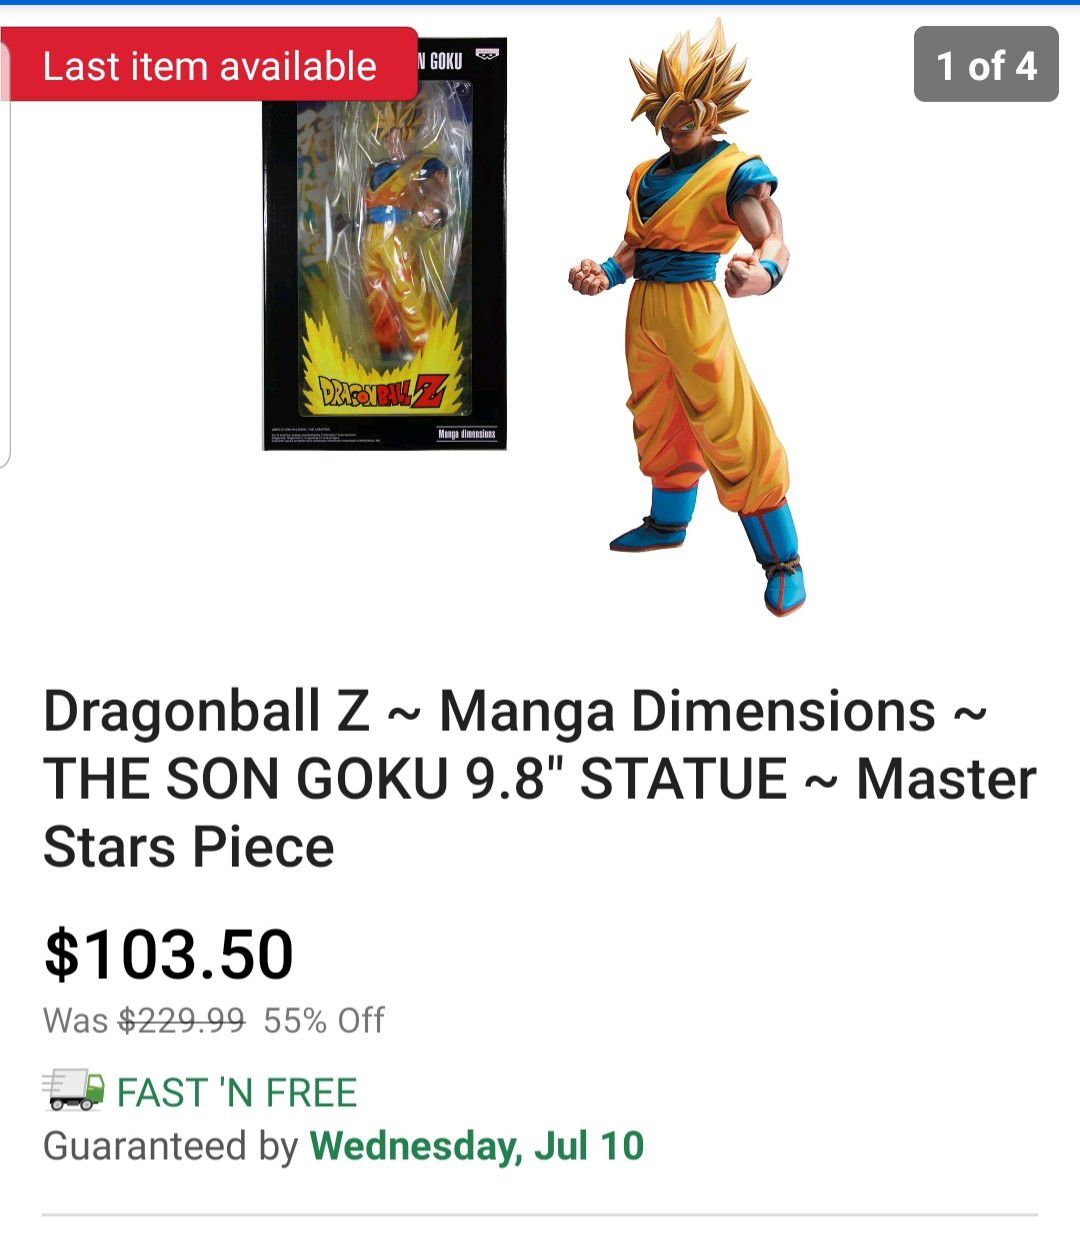 Dragonball Z The son Goku 9.8 statue